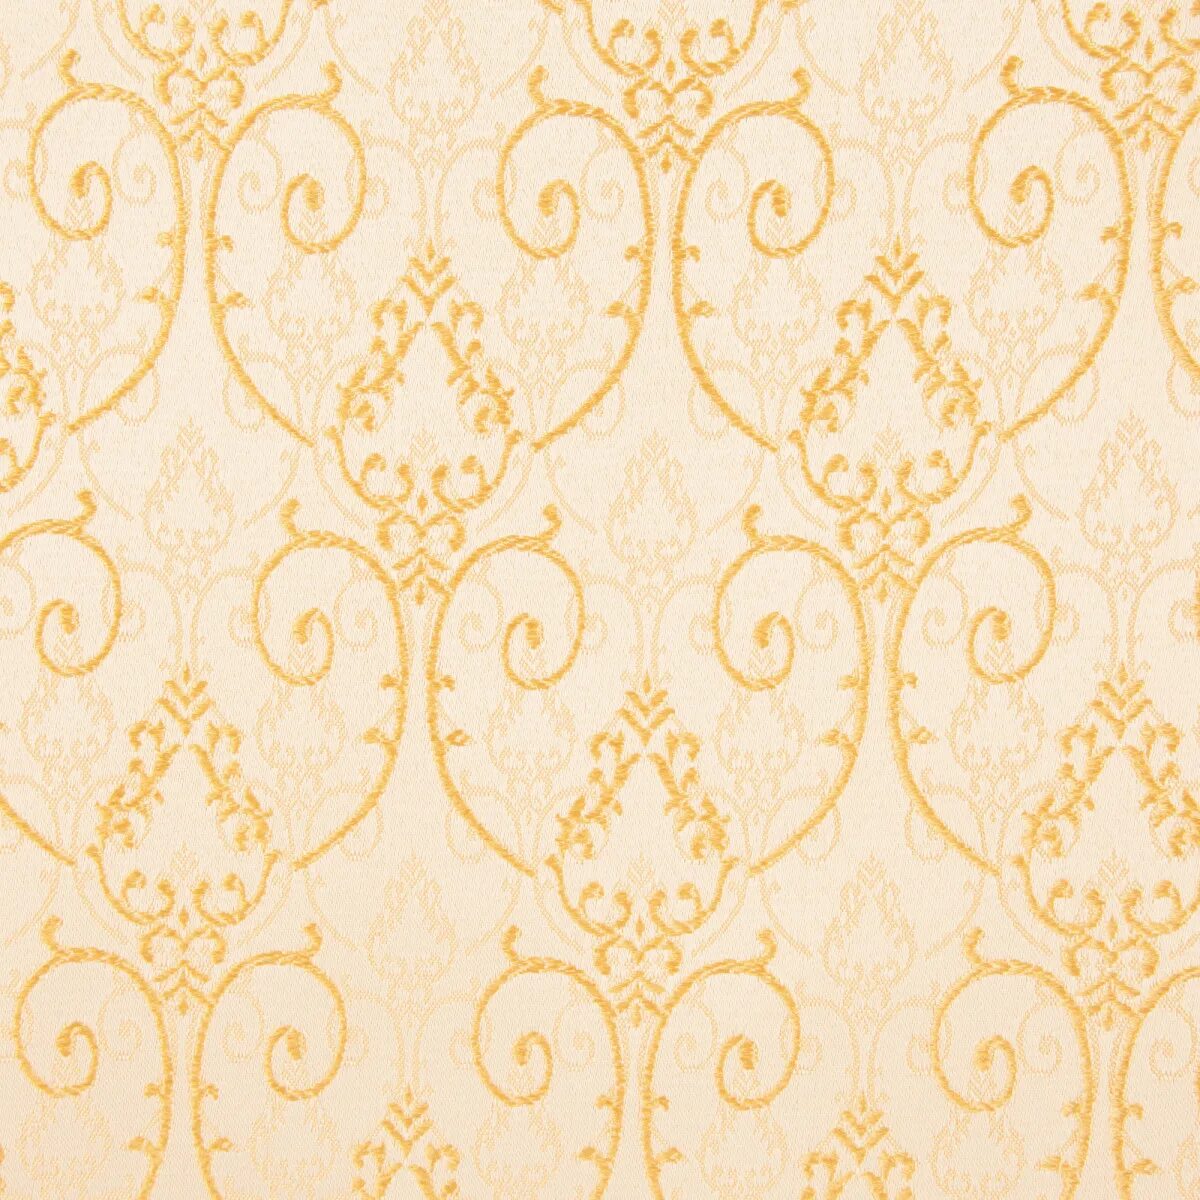 Версаль ткань. Versal ткань. Ткань Версаль. Шторная ткань Версаль. Ткань Версаль для штор.